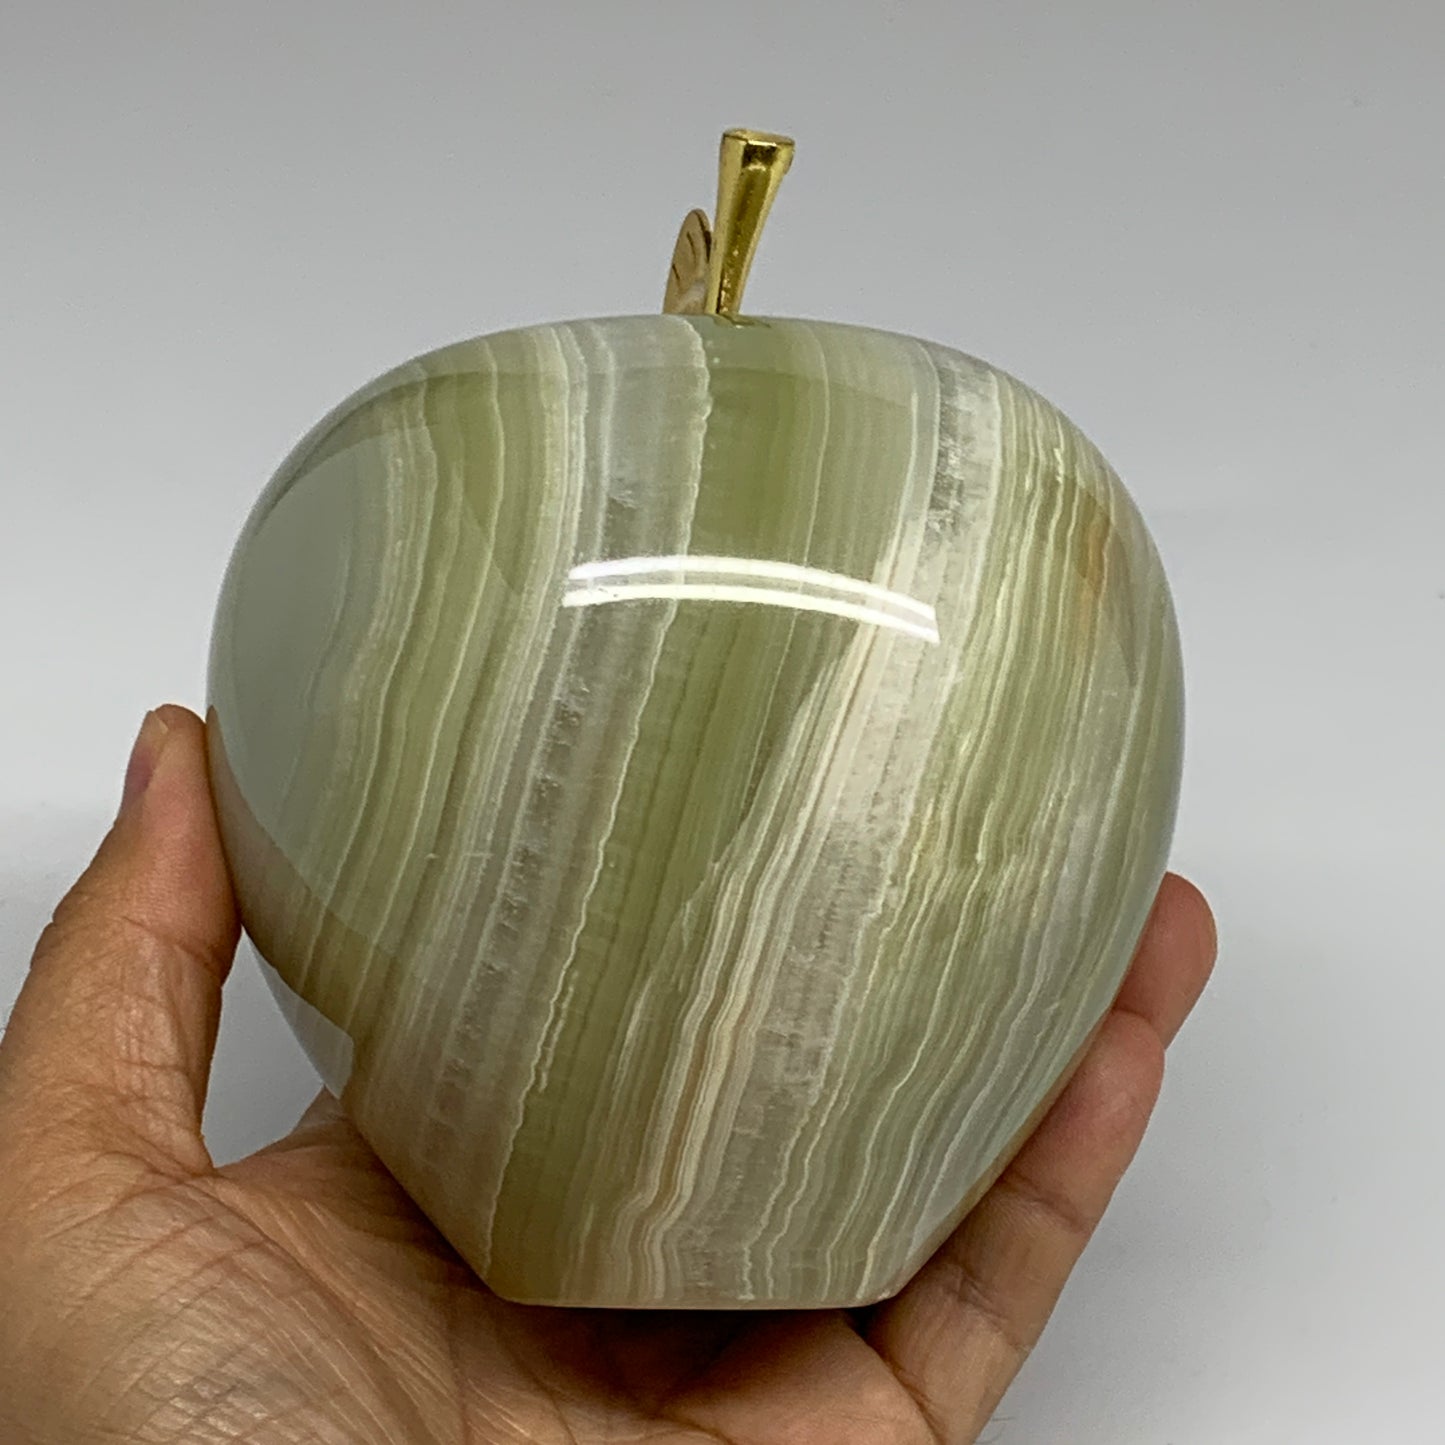 3.4 lbs, 3.9"x4" Natural Green Onyx Apple Gemstone @Afghanistan, B32515